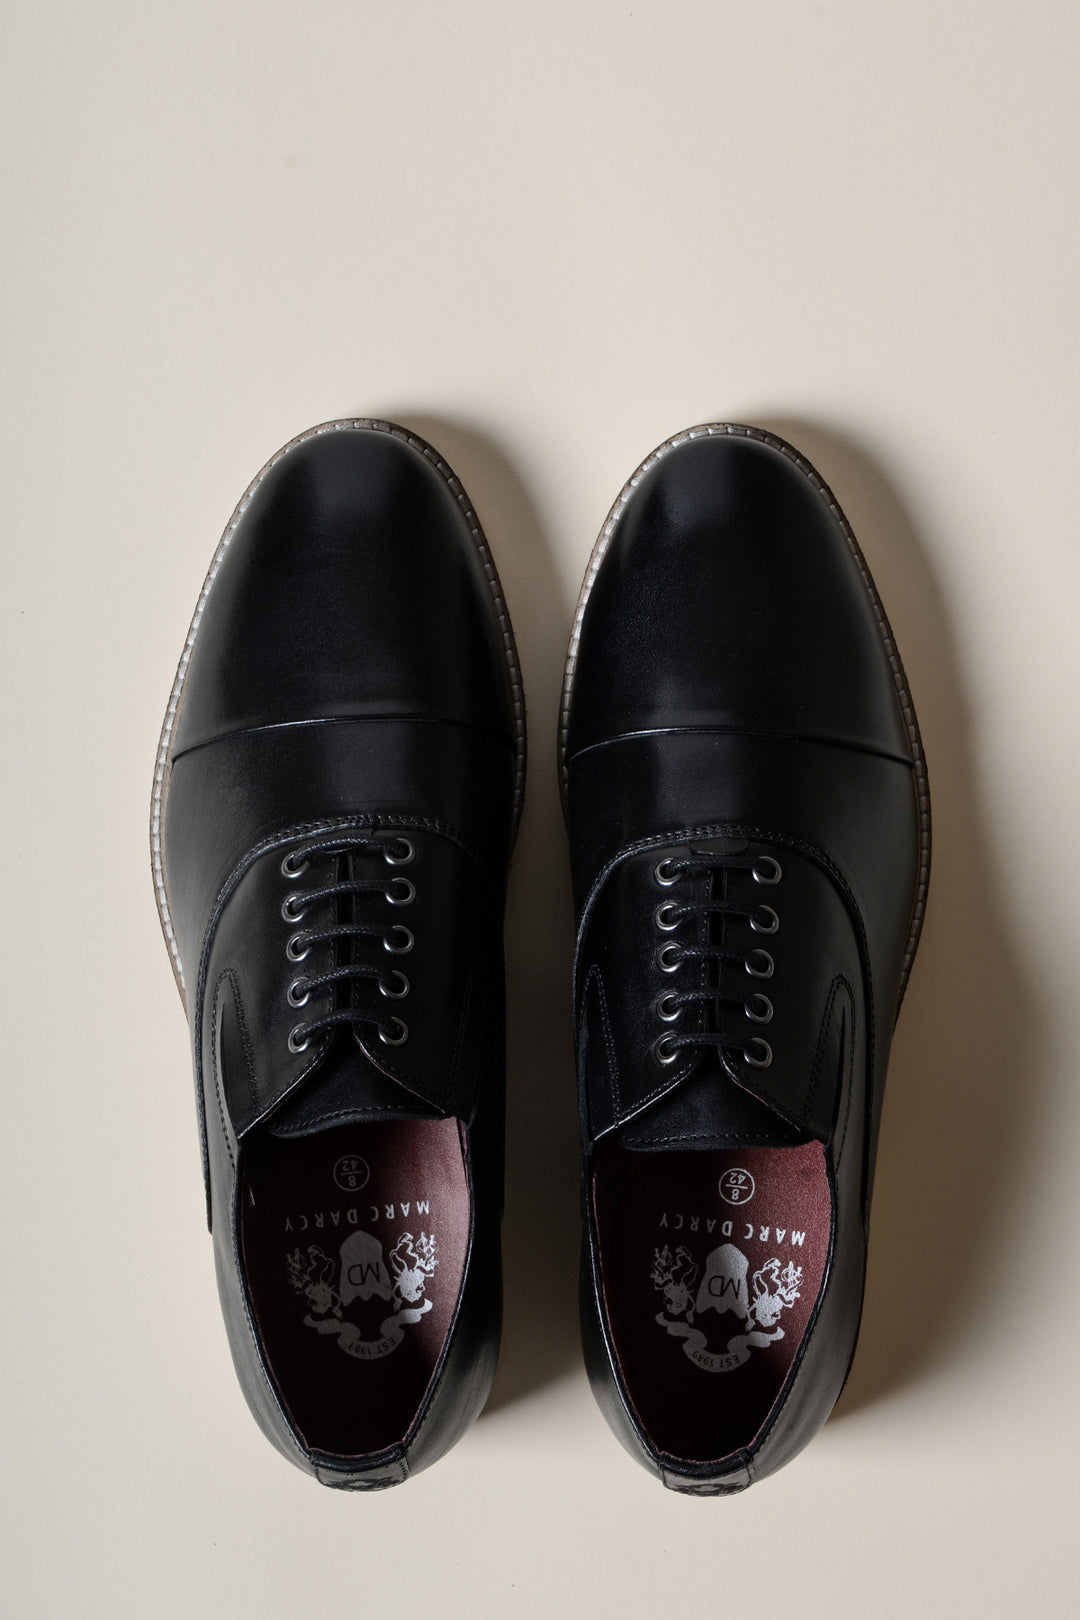 GAVIN - Black Leather Cap Toe Oxford Shoe